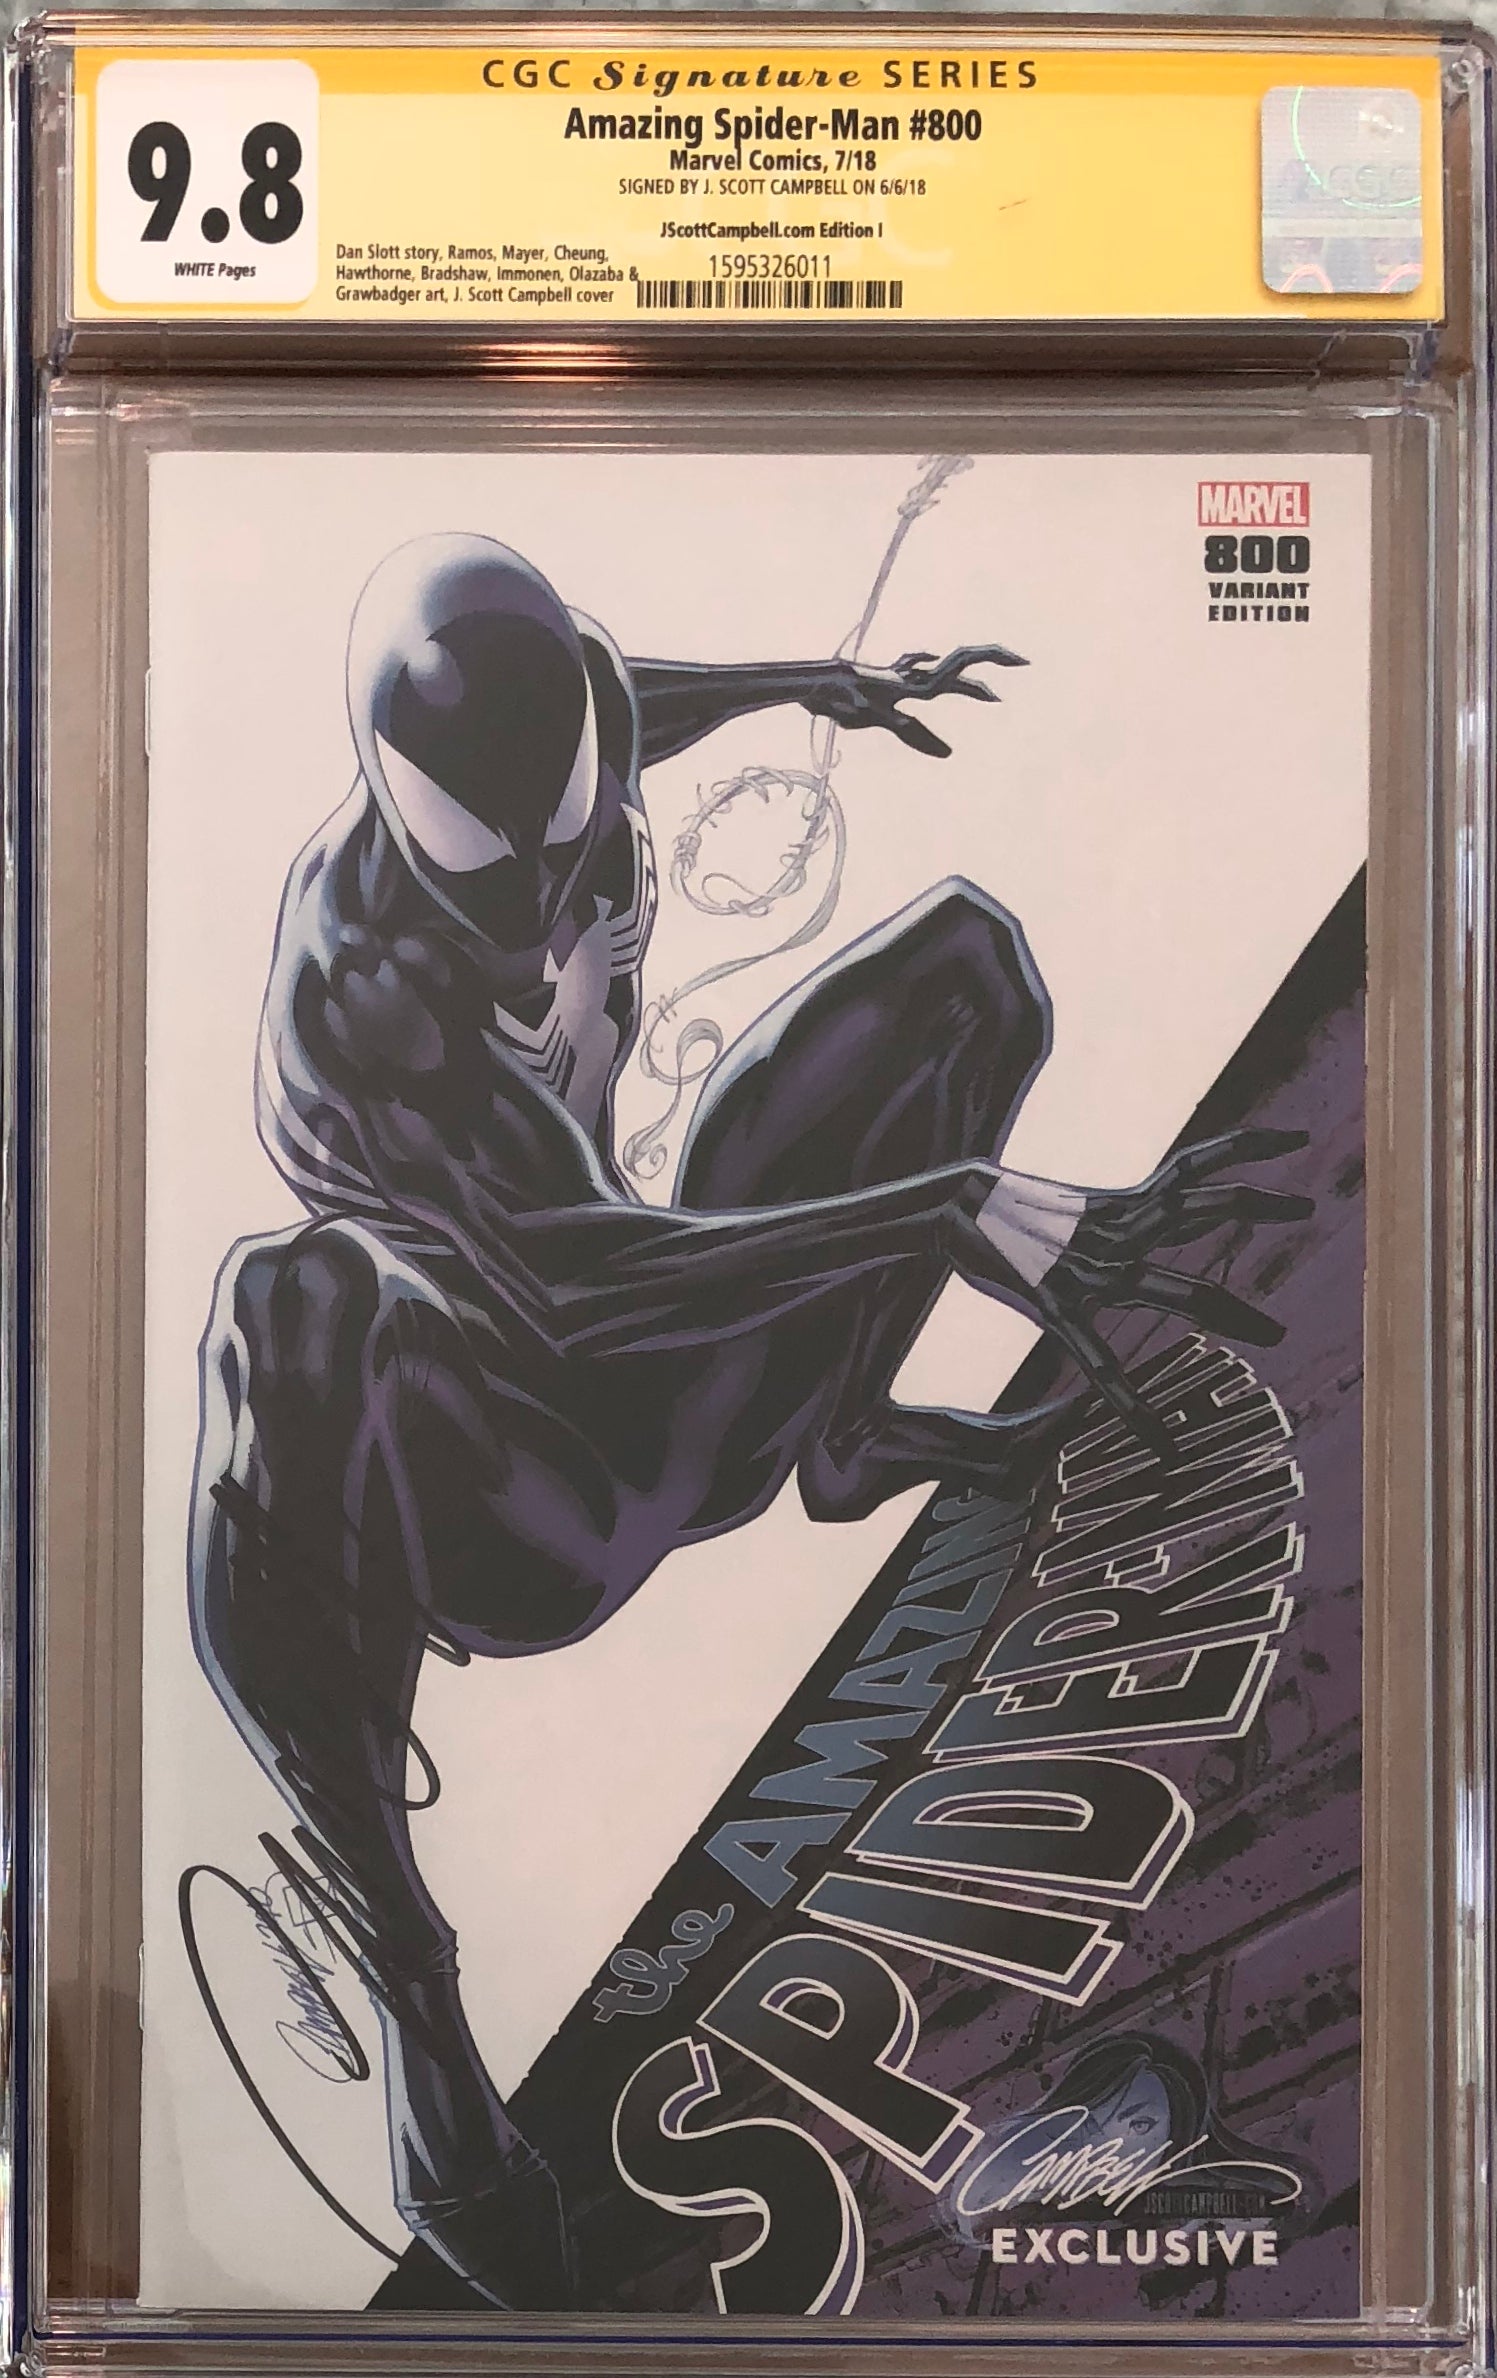 Amazing Spider-Man #800 J. Scott Campbell I Edition SDCC "Black Spider-Man" Exclusive CGC 9.8 SS